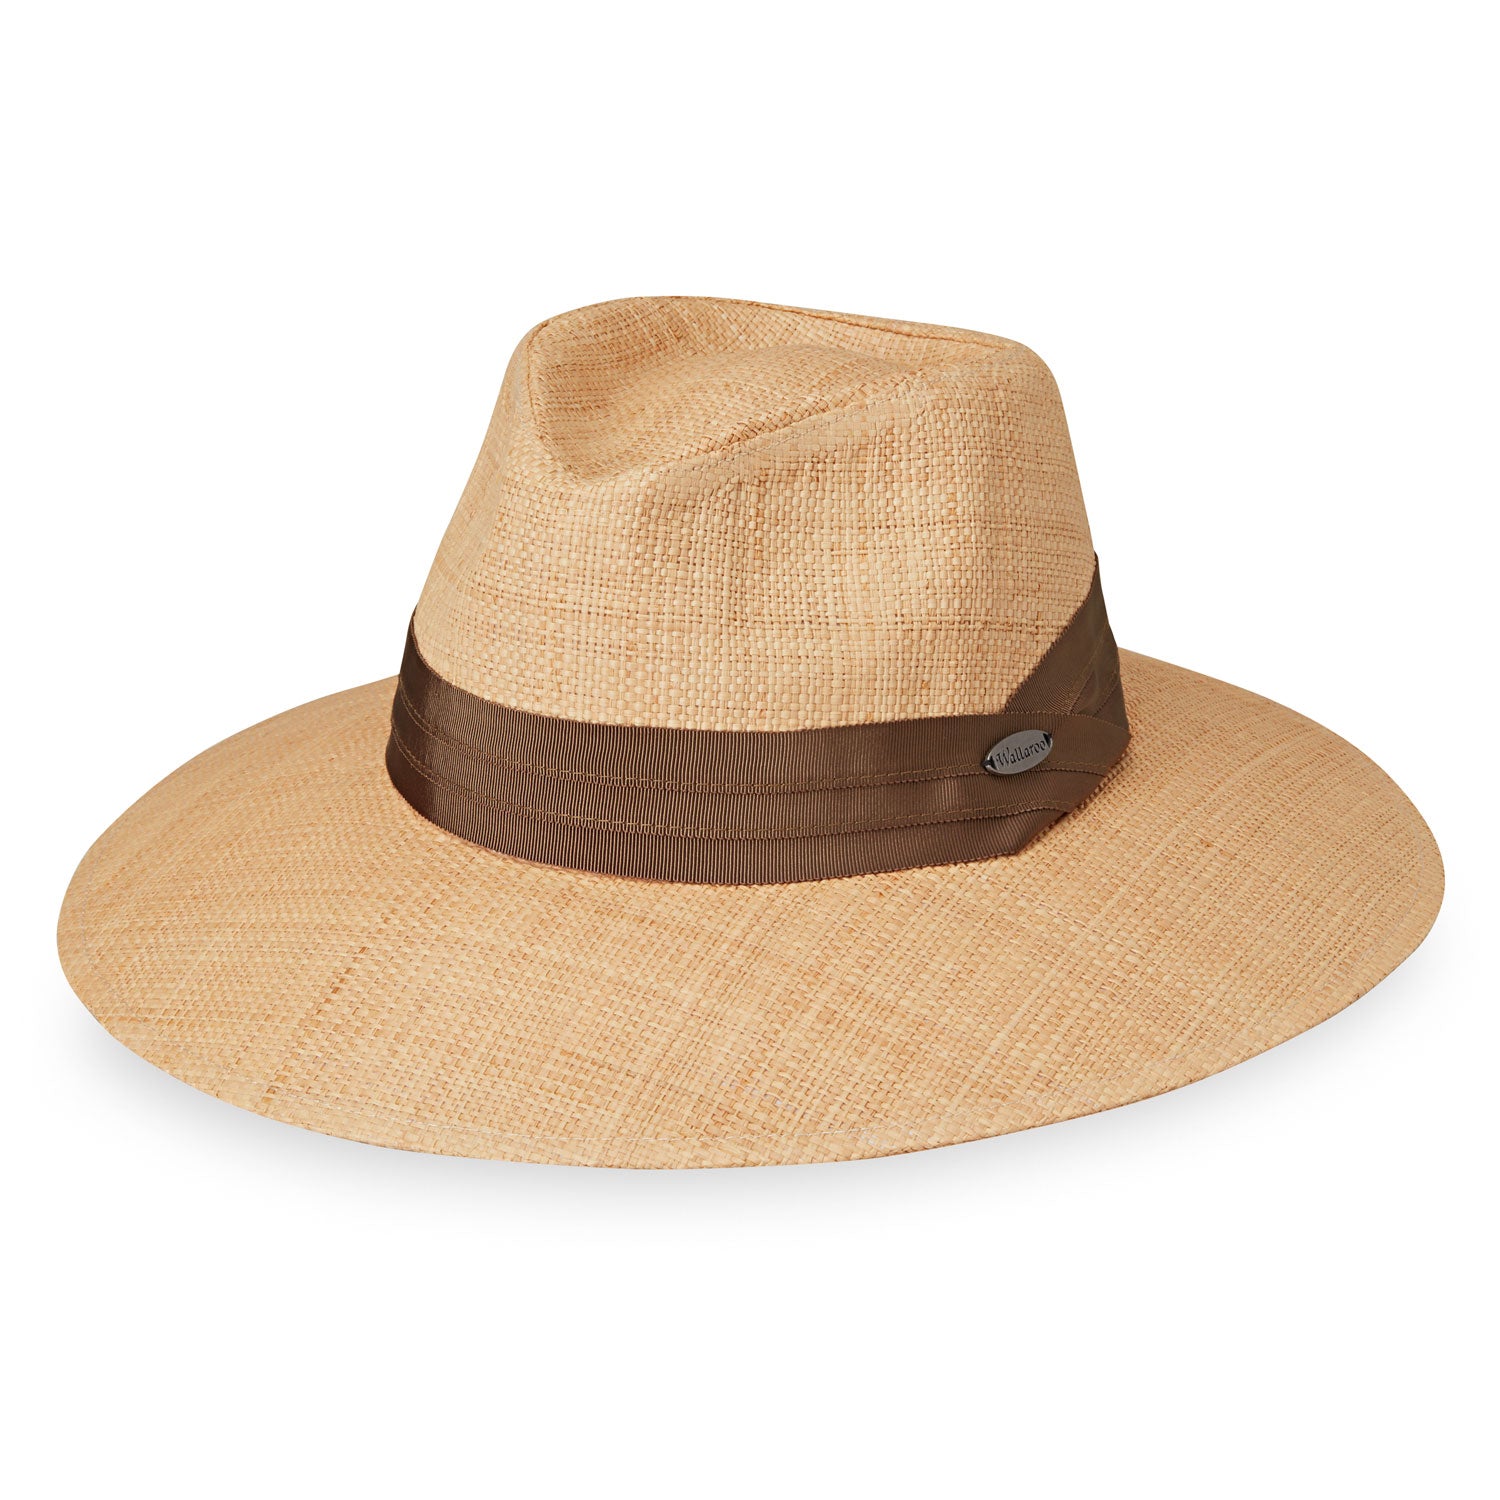 Featuring UPF Charlotte Raffia Fedora Style Sun Hat with cotton lining from Wallaroo